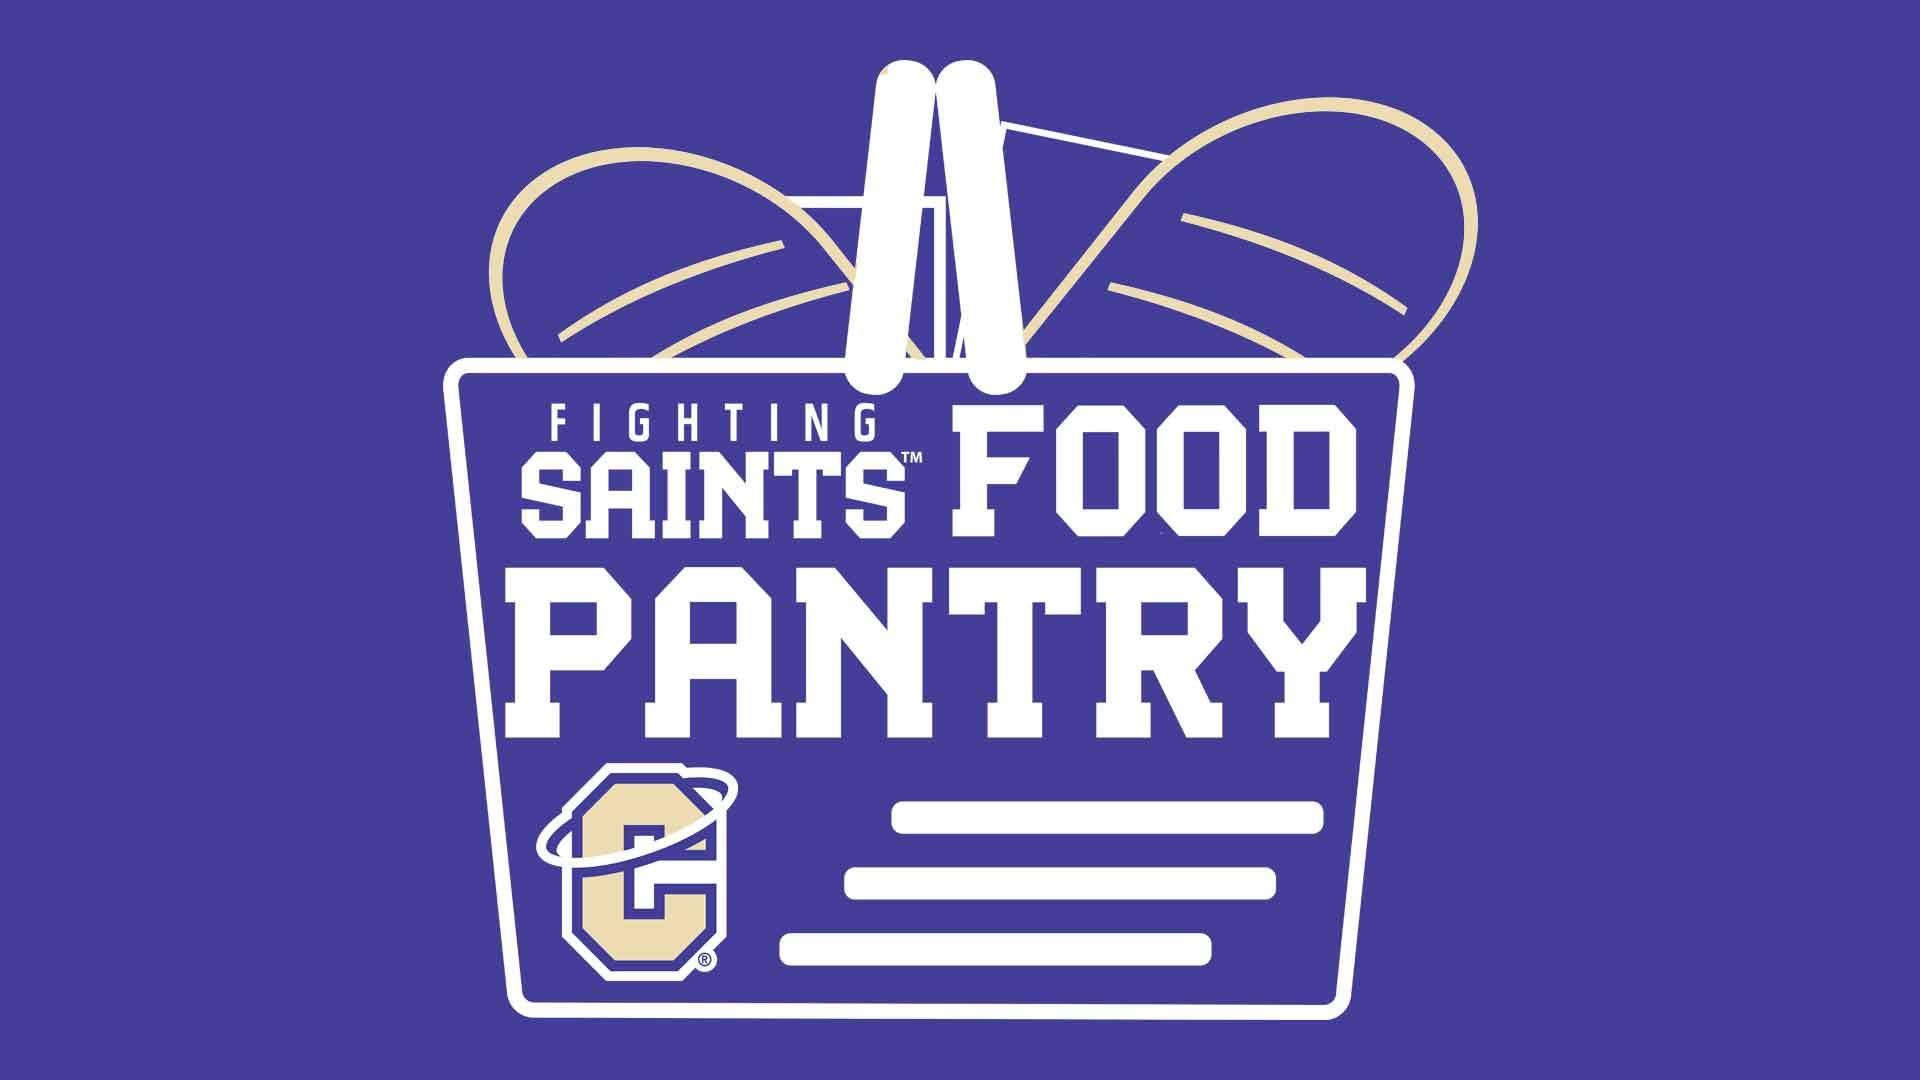 Saints Food Pantry